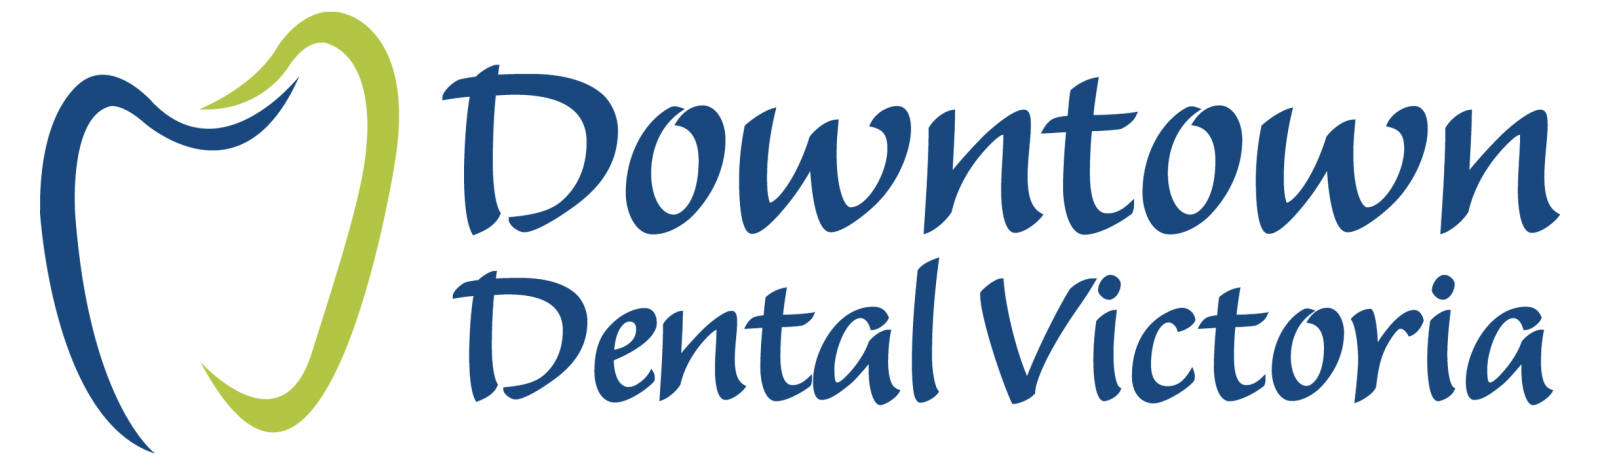 Dentist in Victoria | Victoria BC Downtown Dental Office